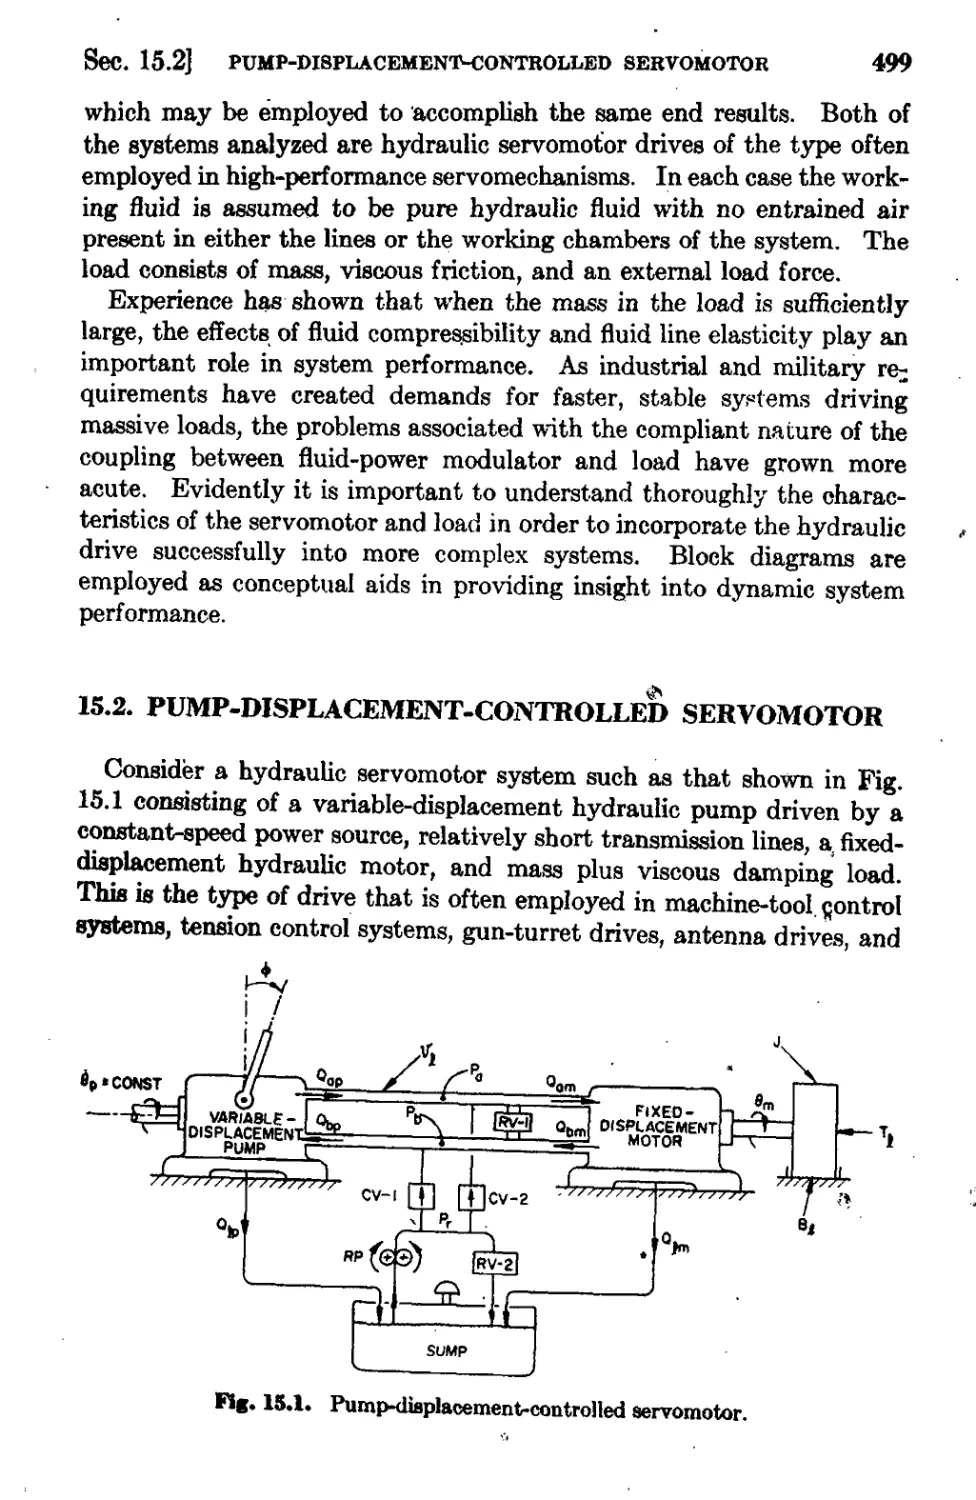 15.2 Pump-Displacement-Controlled Servomotor